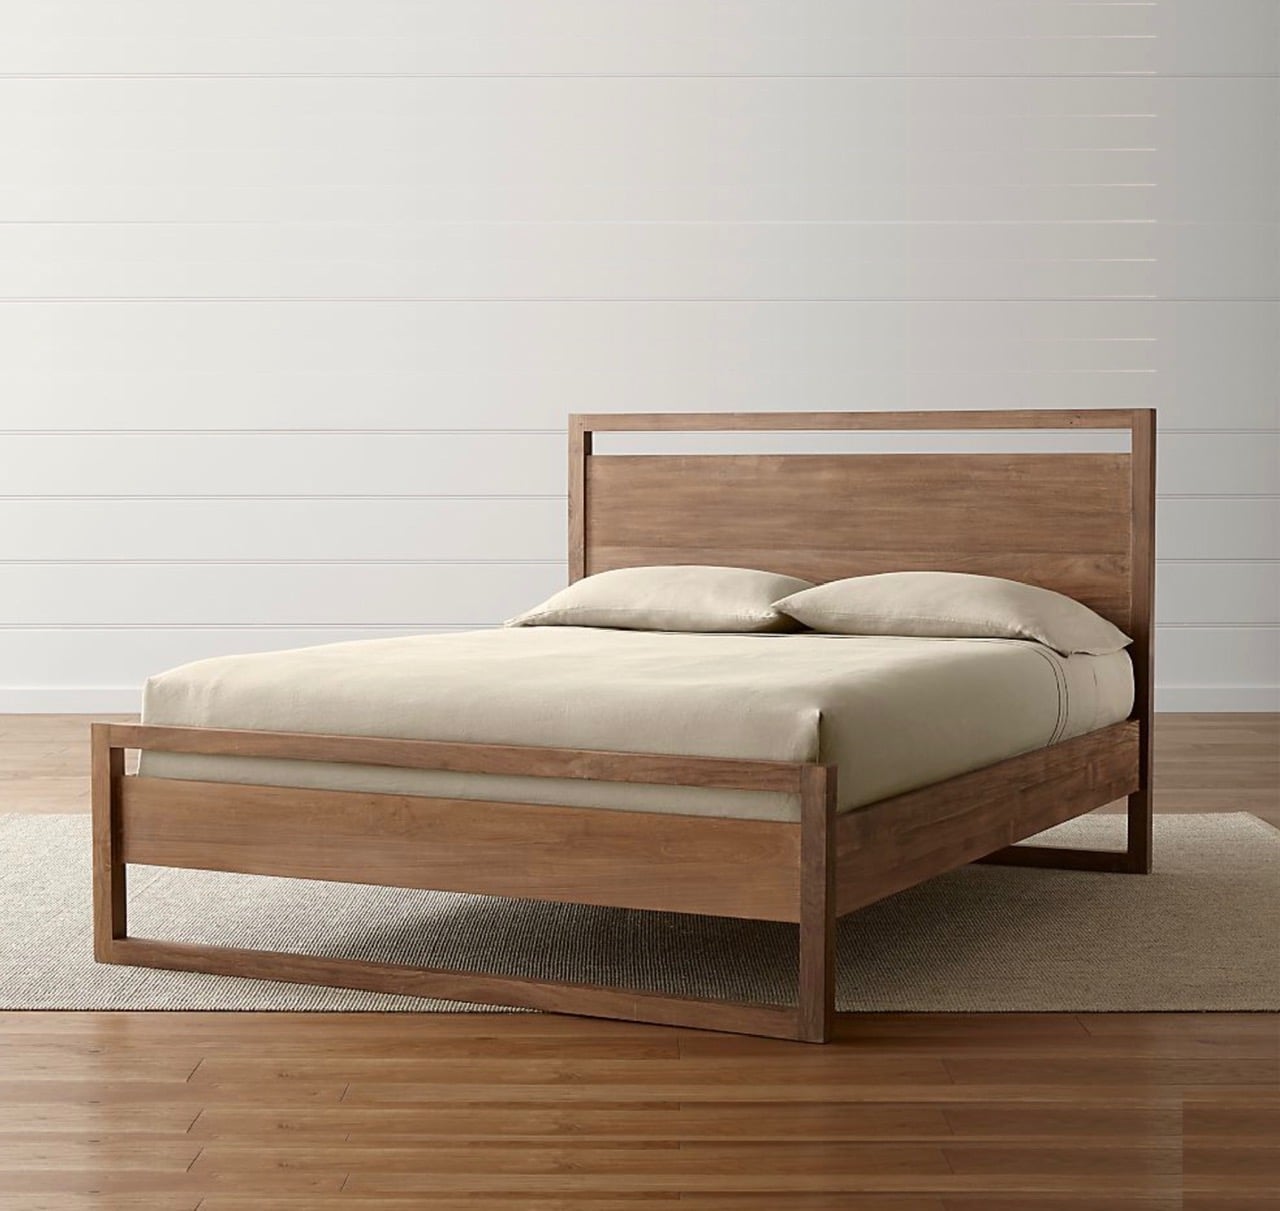 Made to Order Bedroom Furniture. - Beds 075-01